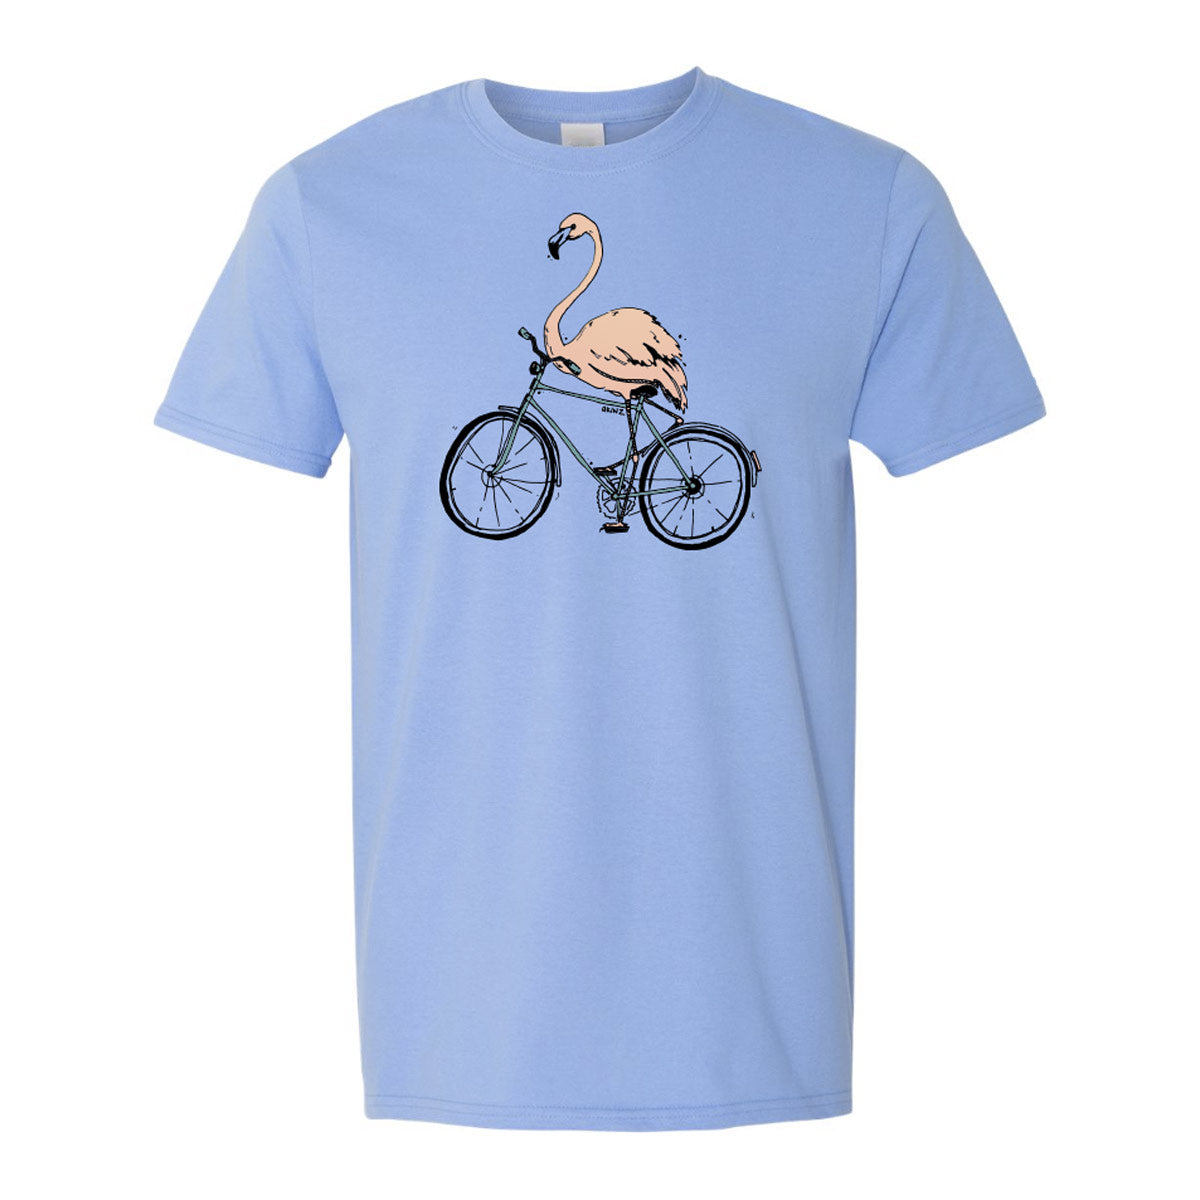 Ride My Bike With No Handlebars Tee - Carolina Blue